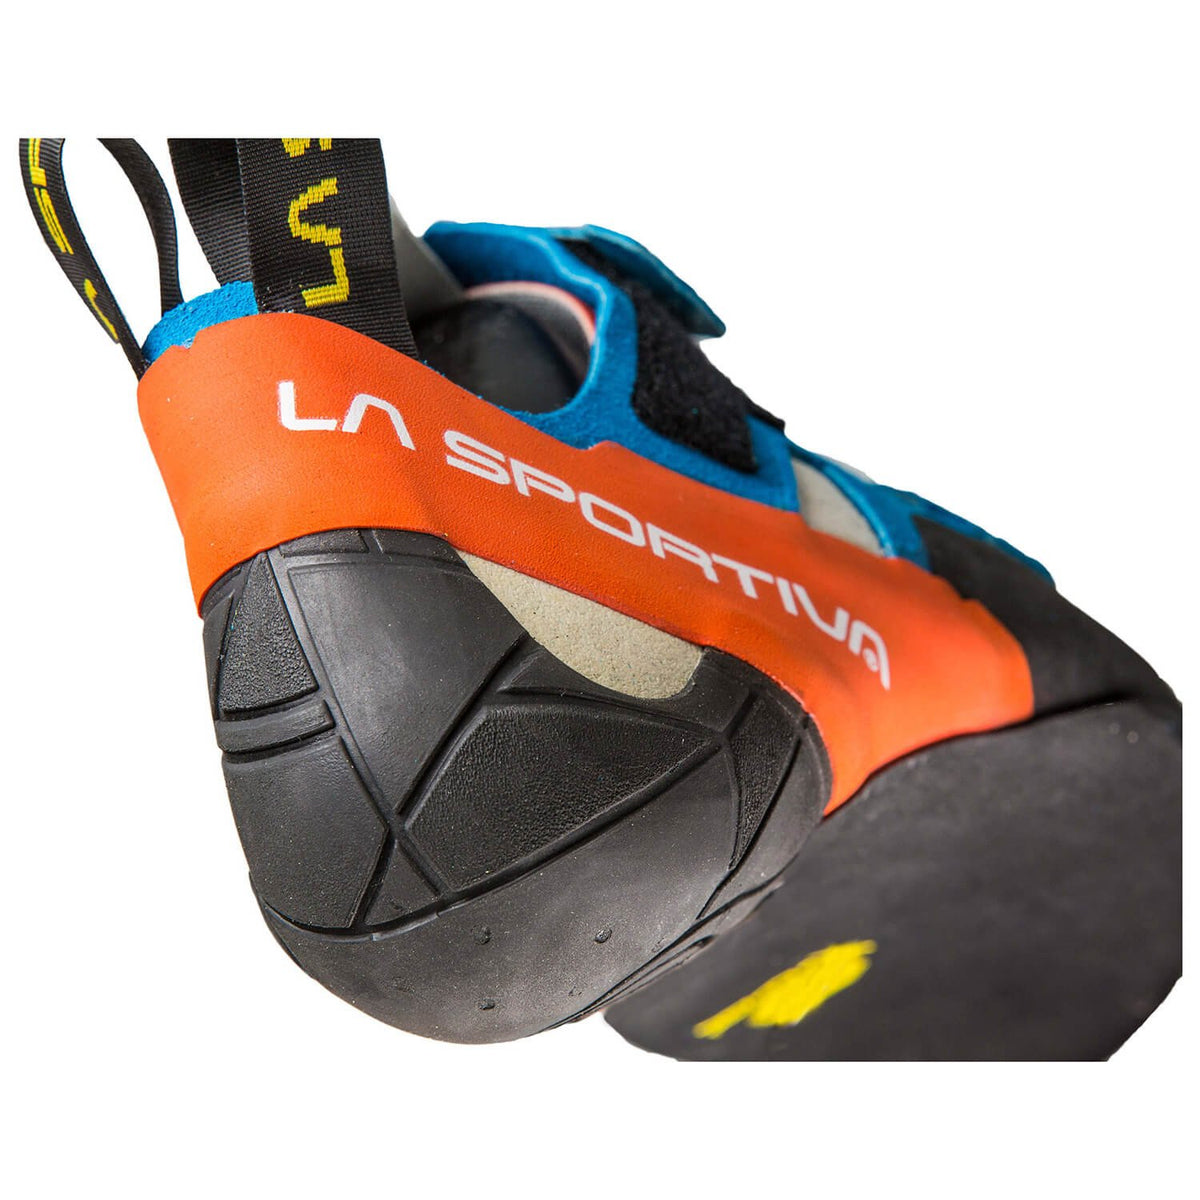 La Sportiva Otaki climbing shoe, view showing heel and outside of the shoe